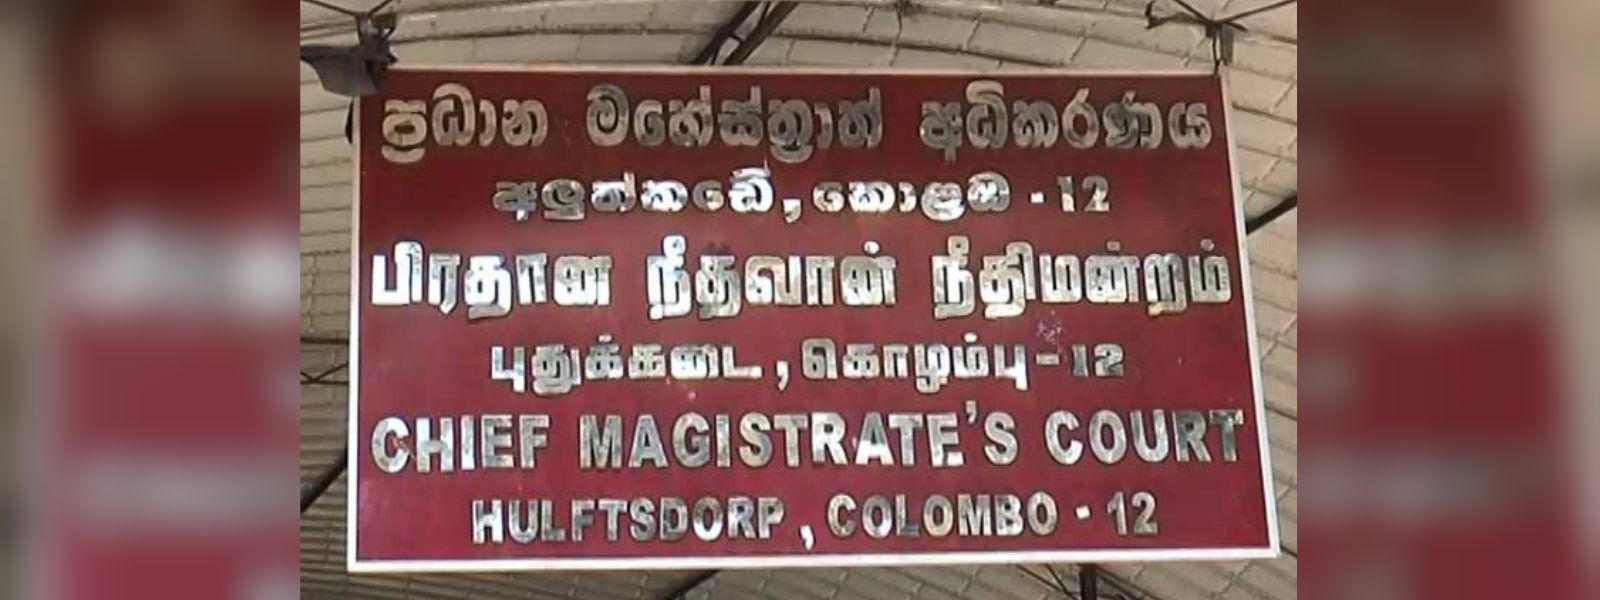 Case against Dr K. Mahanama and P. Dissanayaka